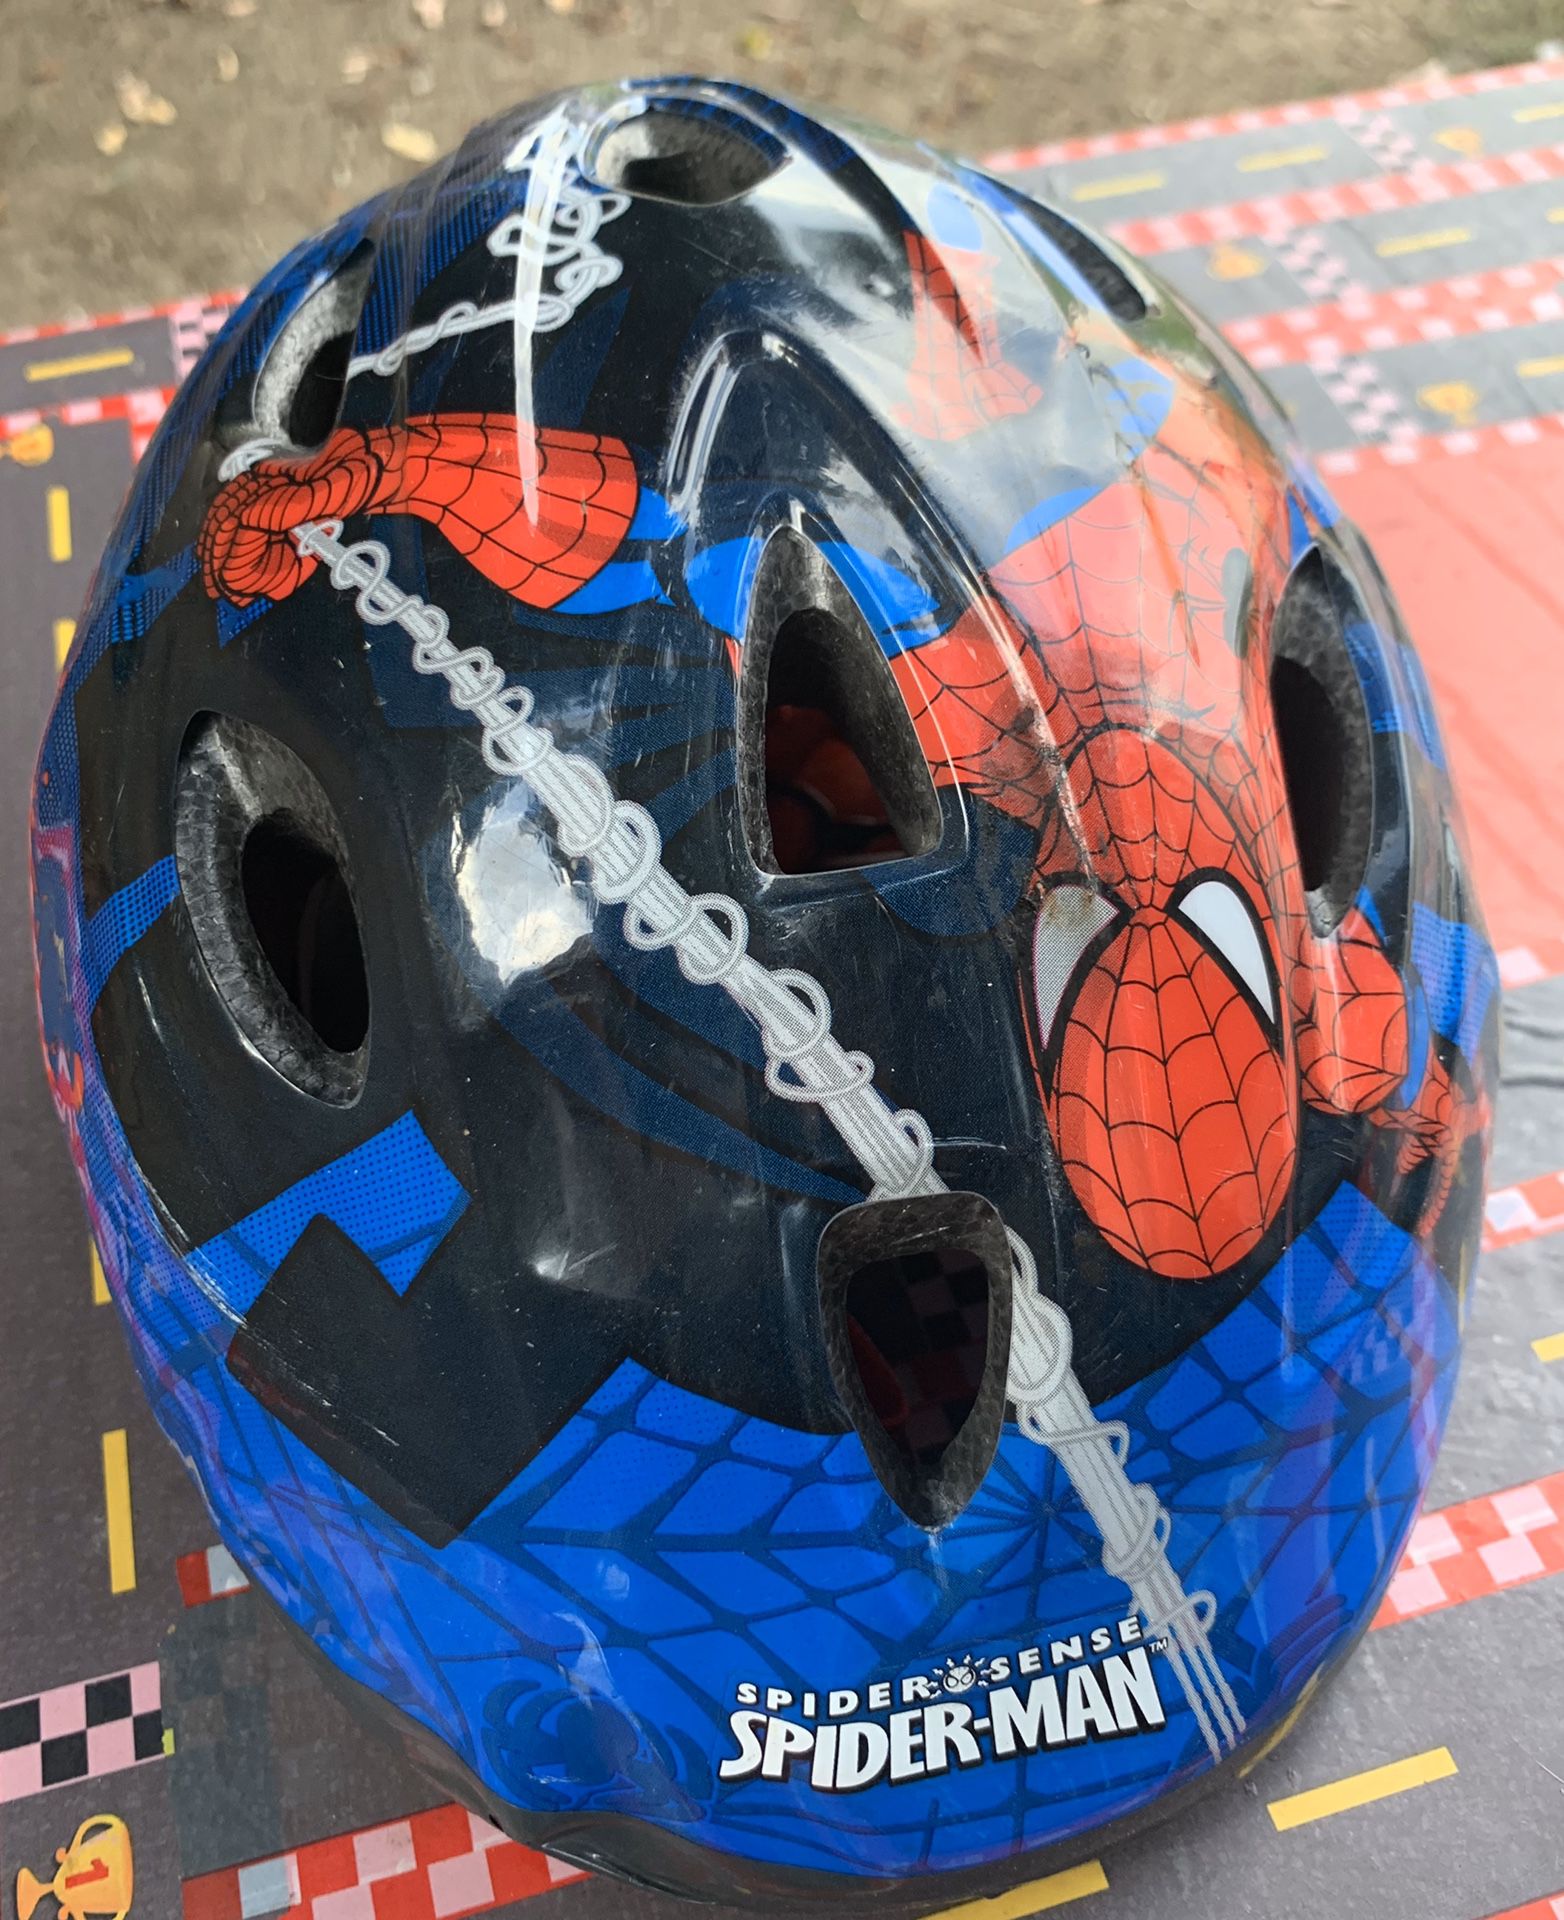 Spider-Man helmet